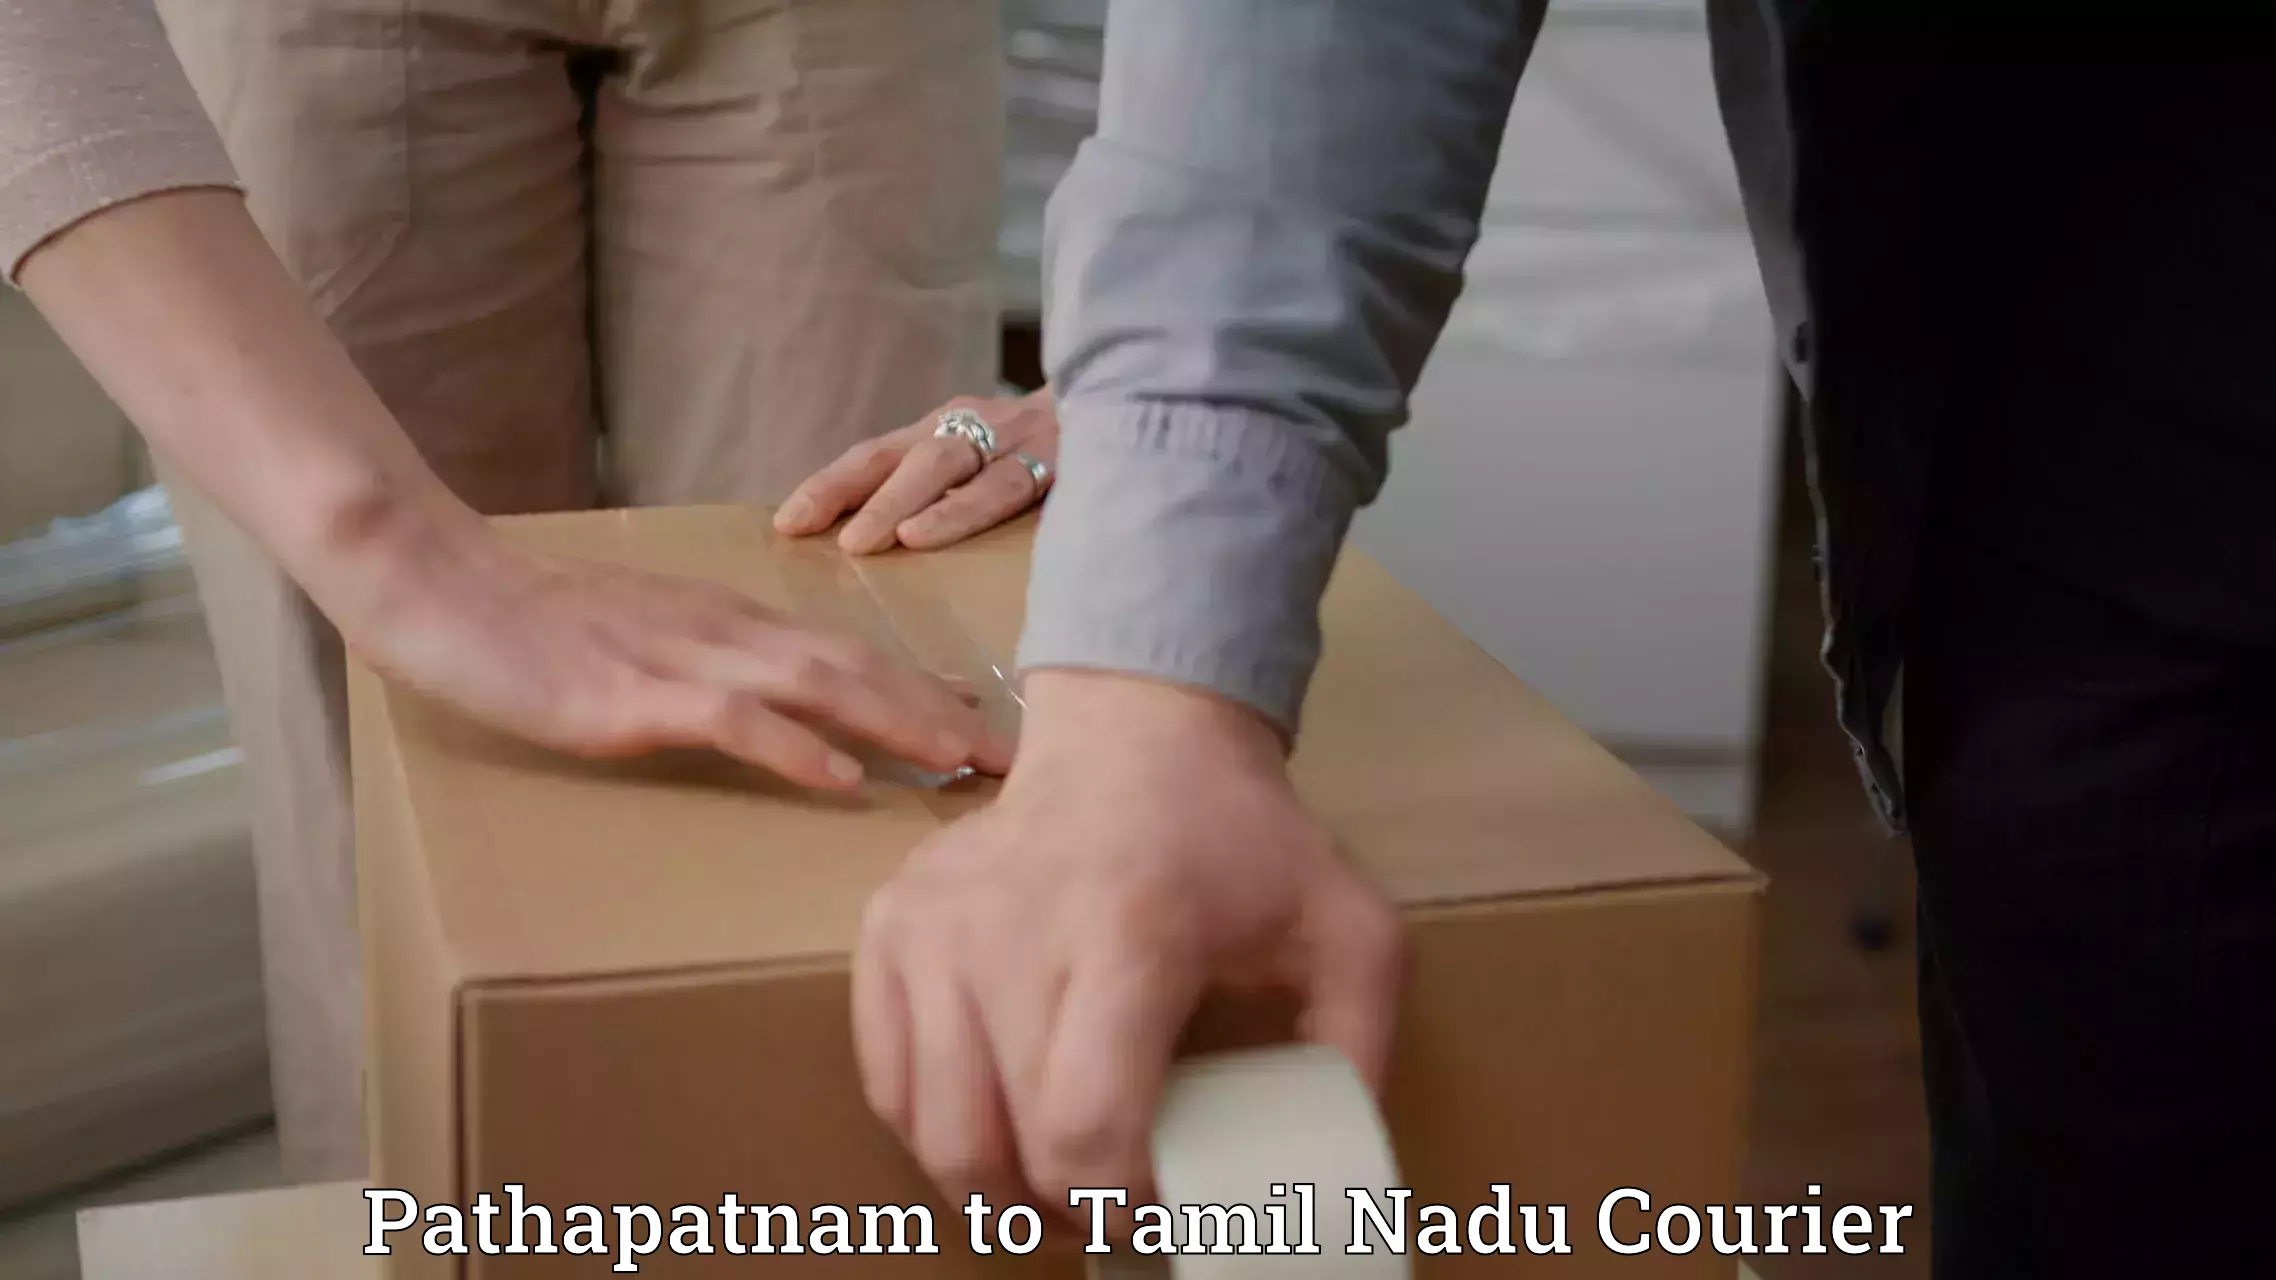 Courier service partnerships Pathapatnam to Tiruchi